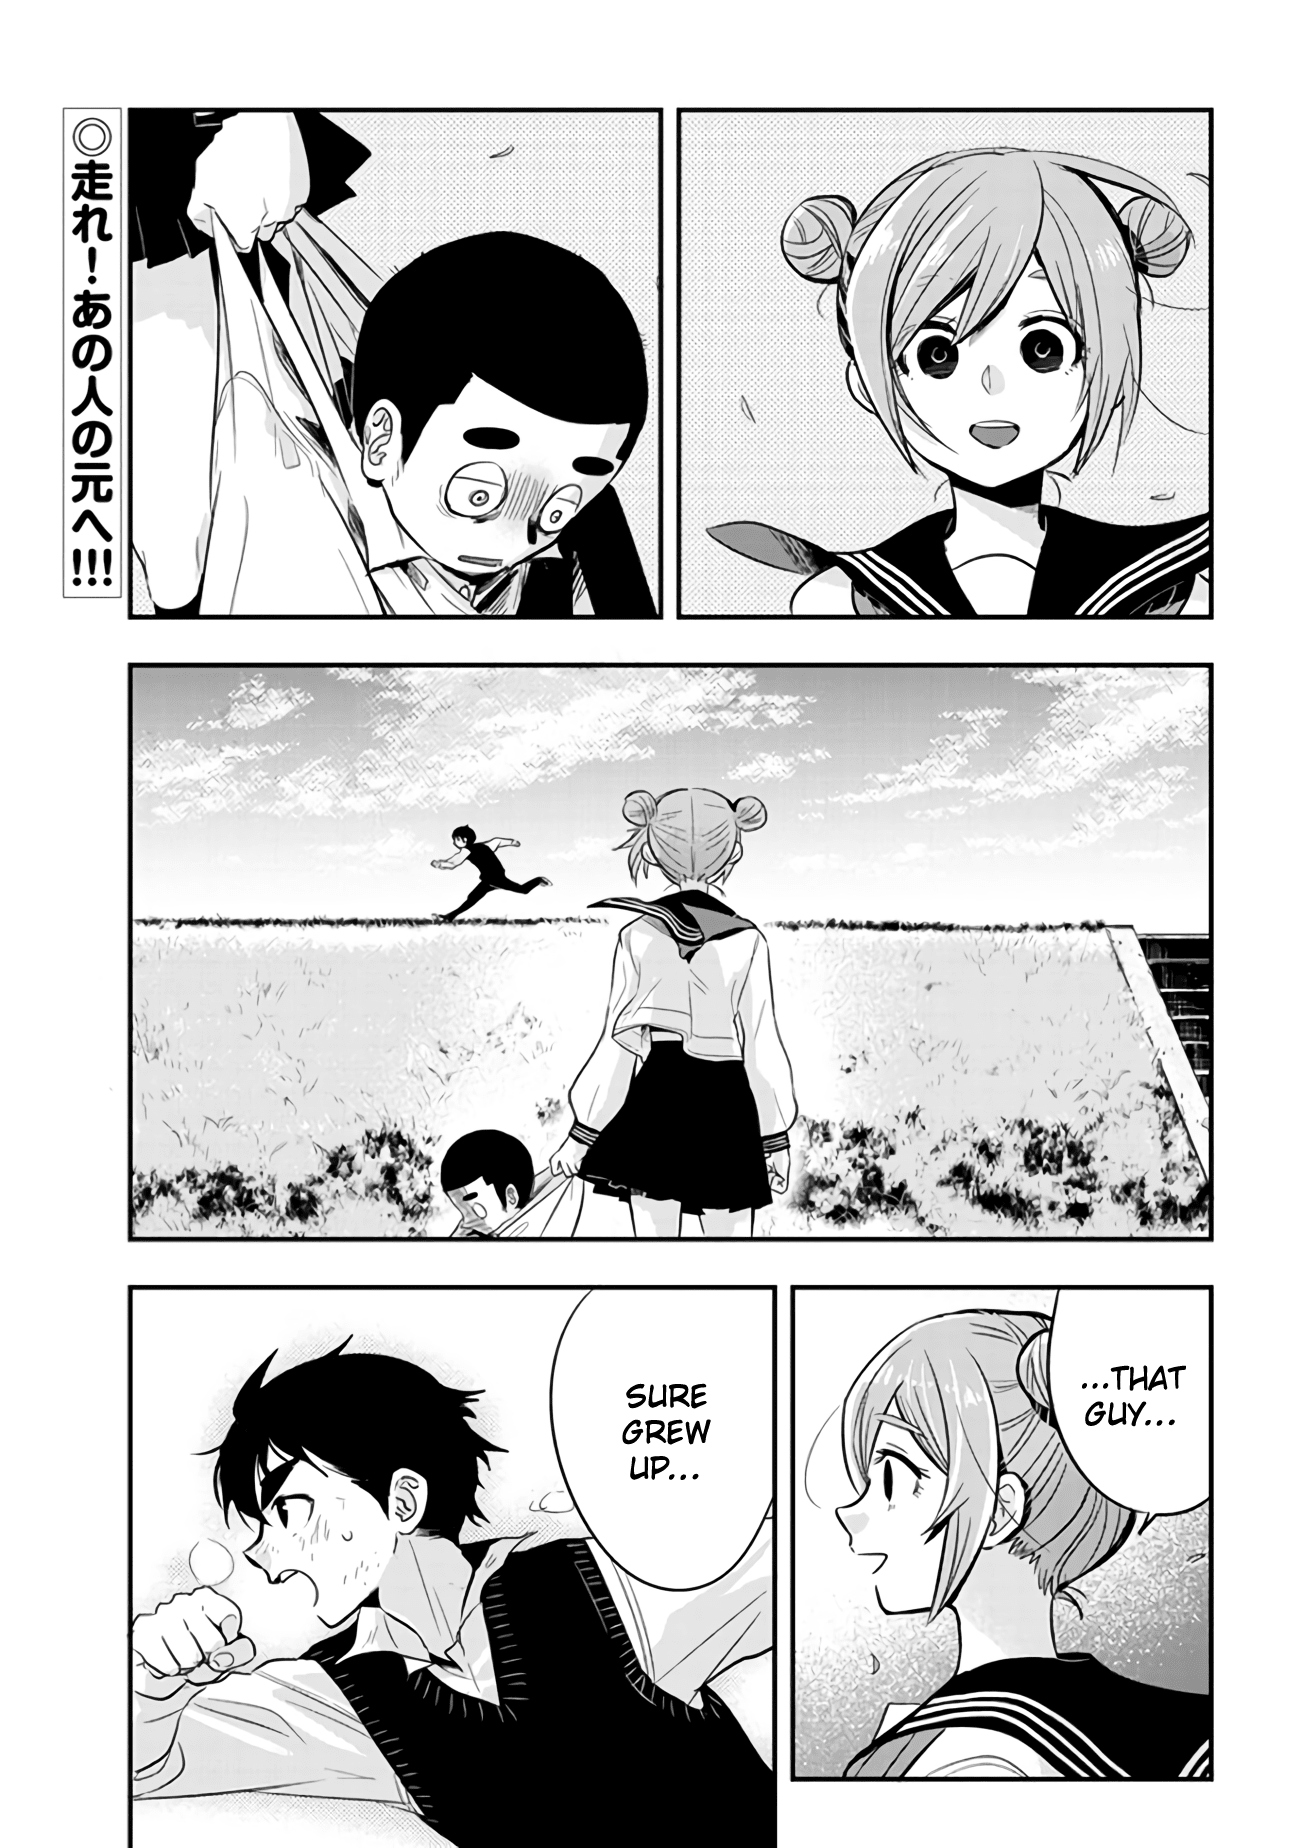 Giri-Giri Saegiru Katagirisan - Page 1